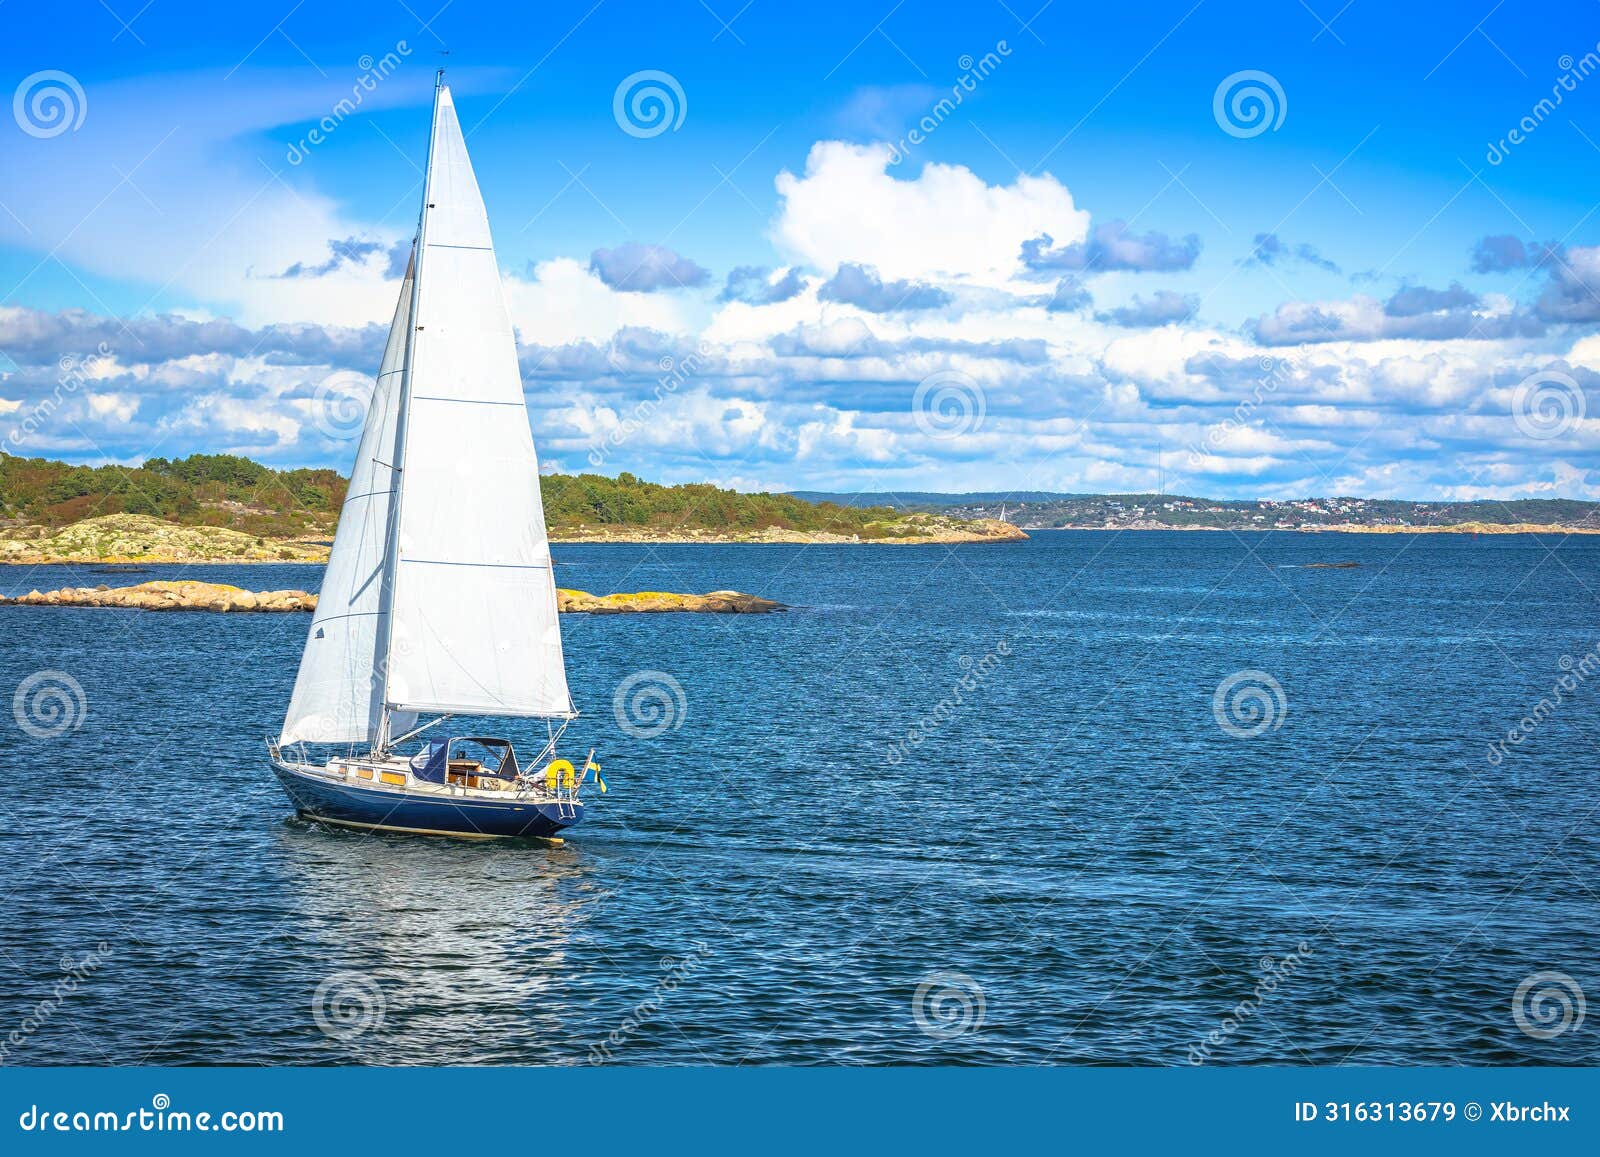 gothenburg archipelago islands sailboat sailing view